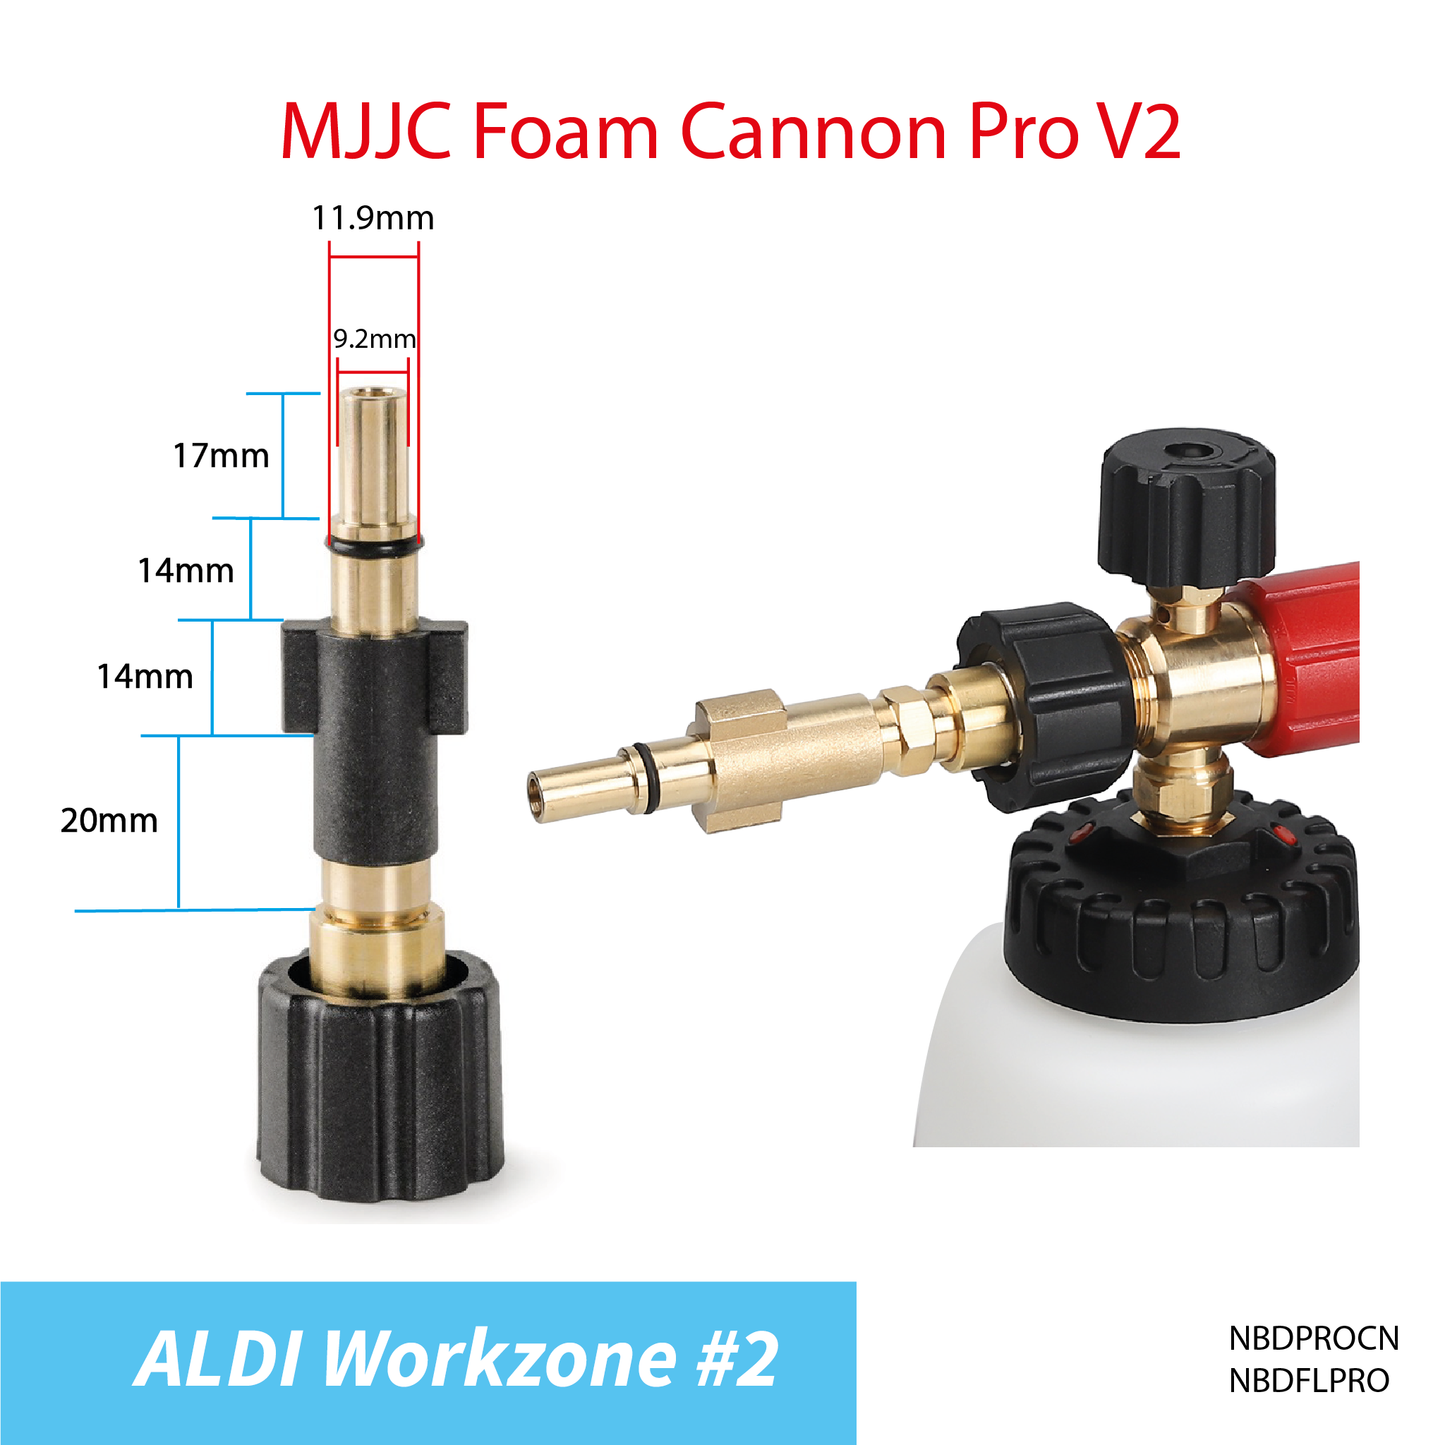 Aldi Workzone pressure washer - MJJC Foam Cannon Pro V2 (Pressure Washer Snow Foam Lance Gun)